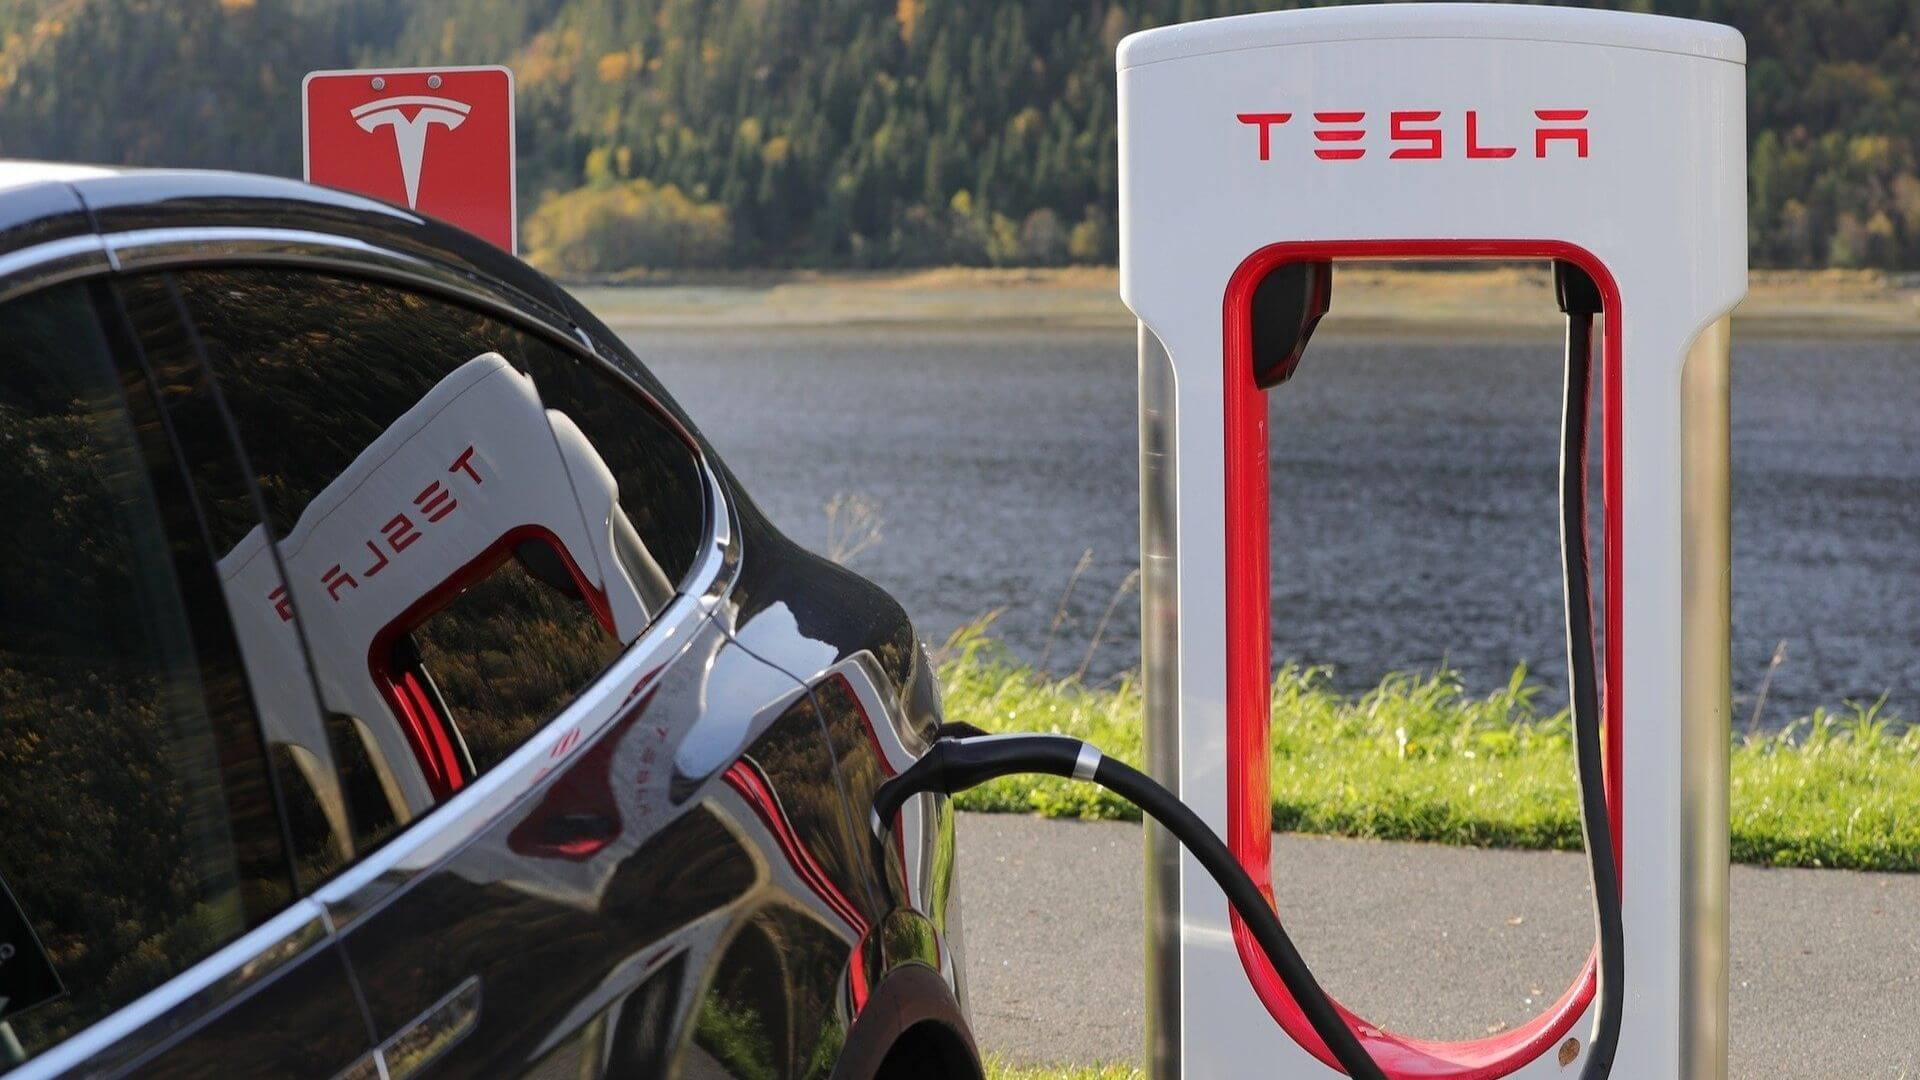 Borne de recharge Tesla